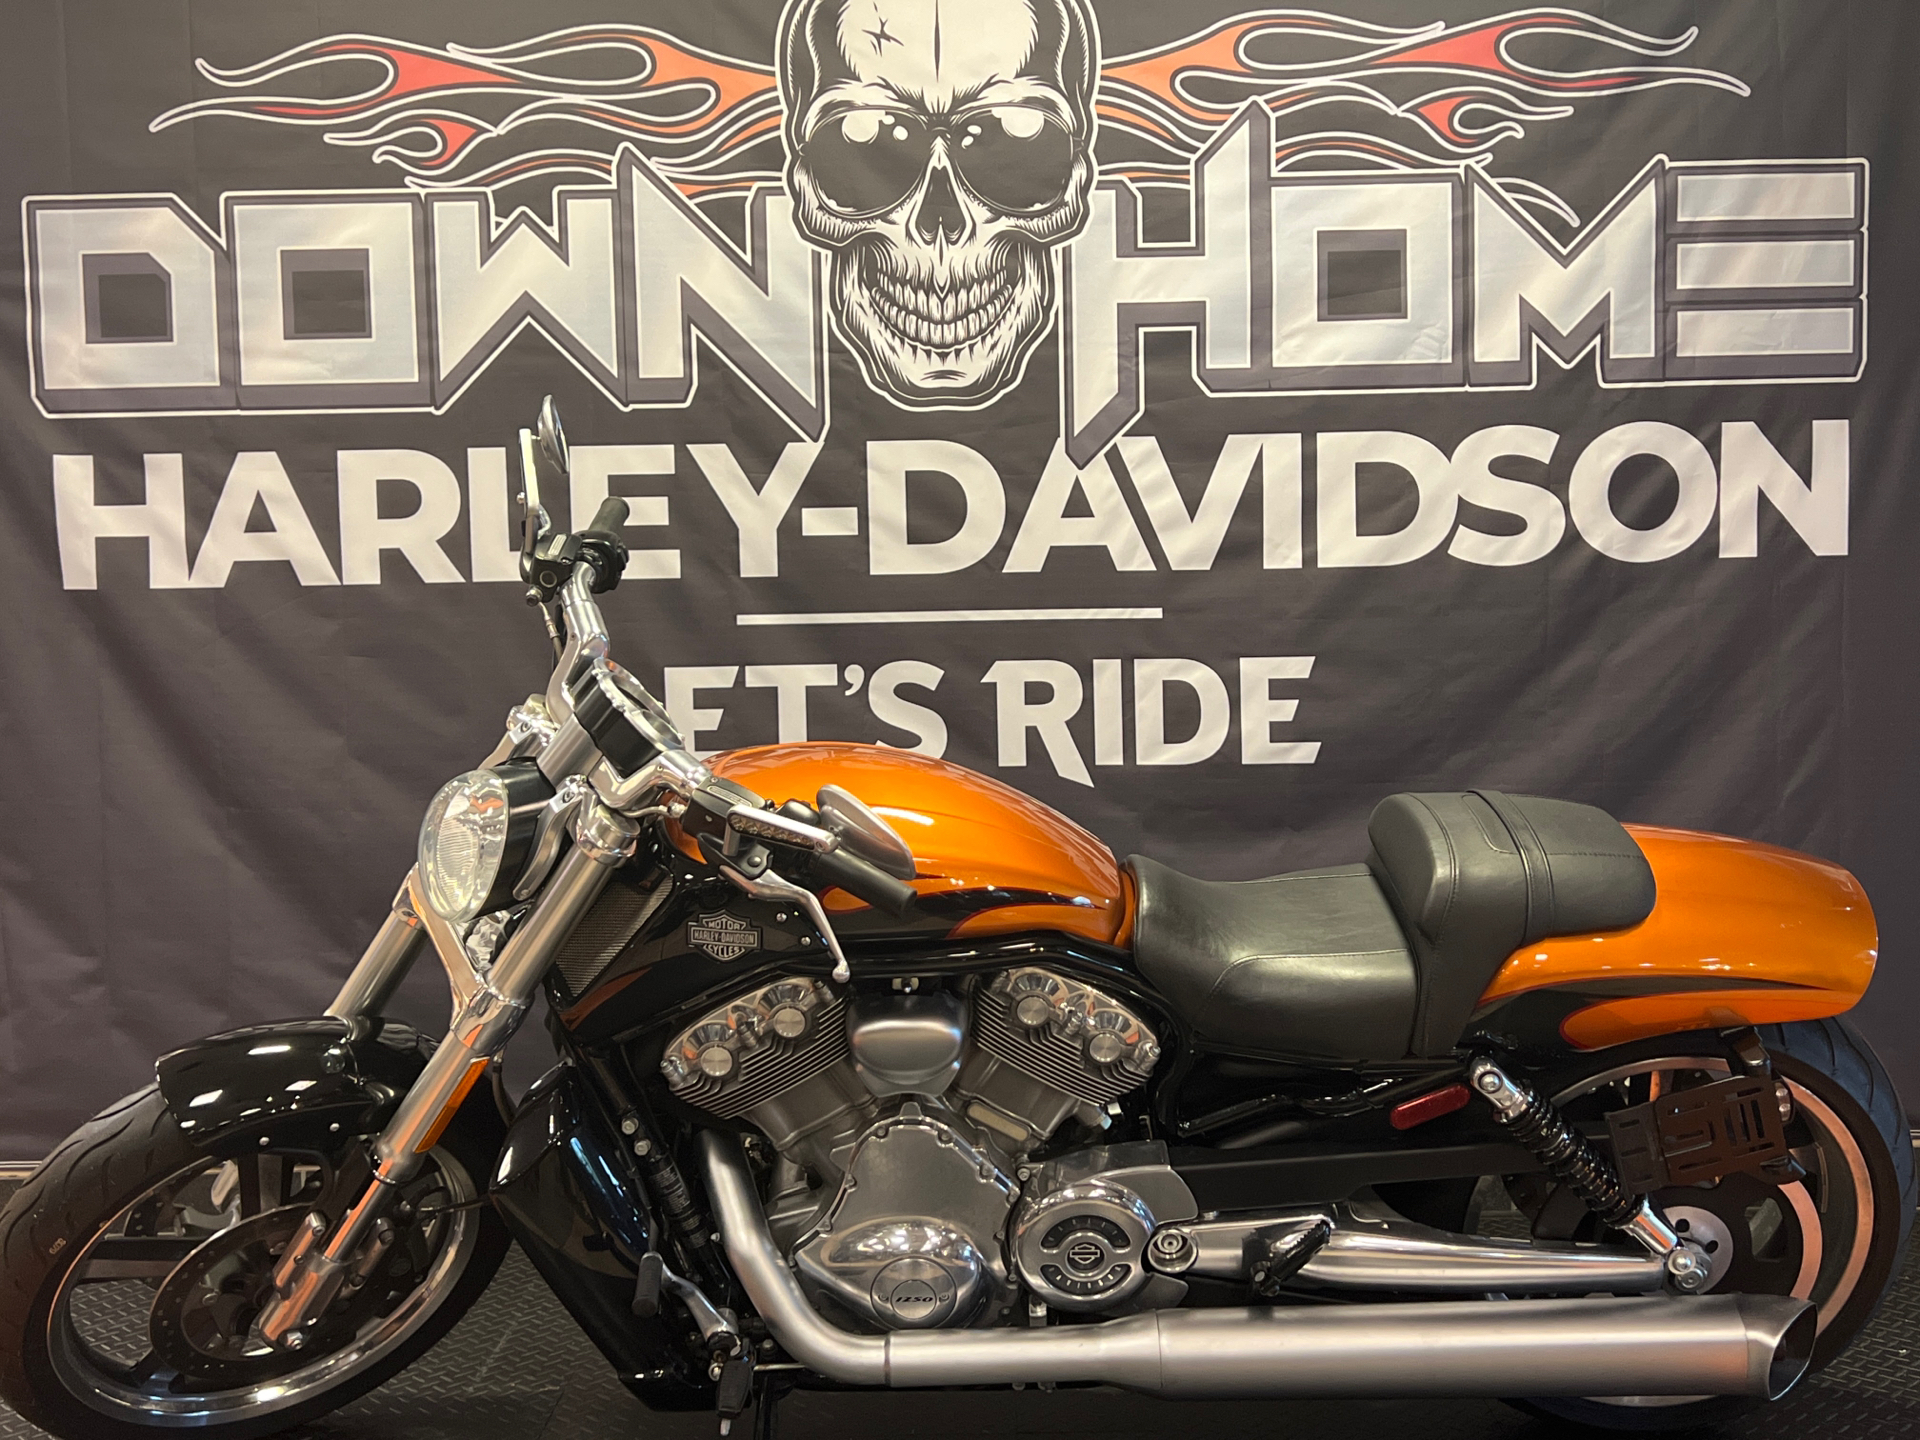 2014 Harley-Davidson V-Rod Muscle® in Burlington, North Carolina - Photo 1